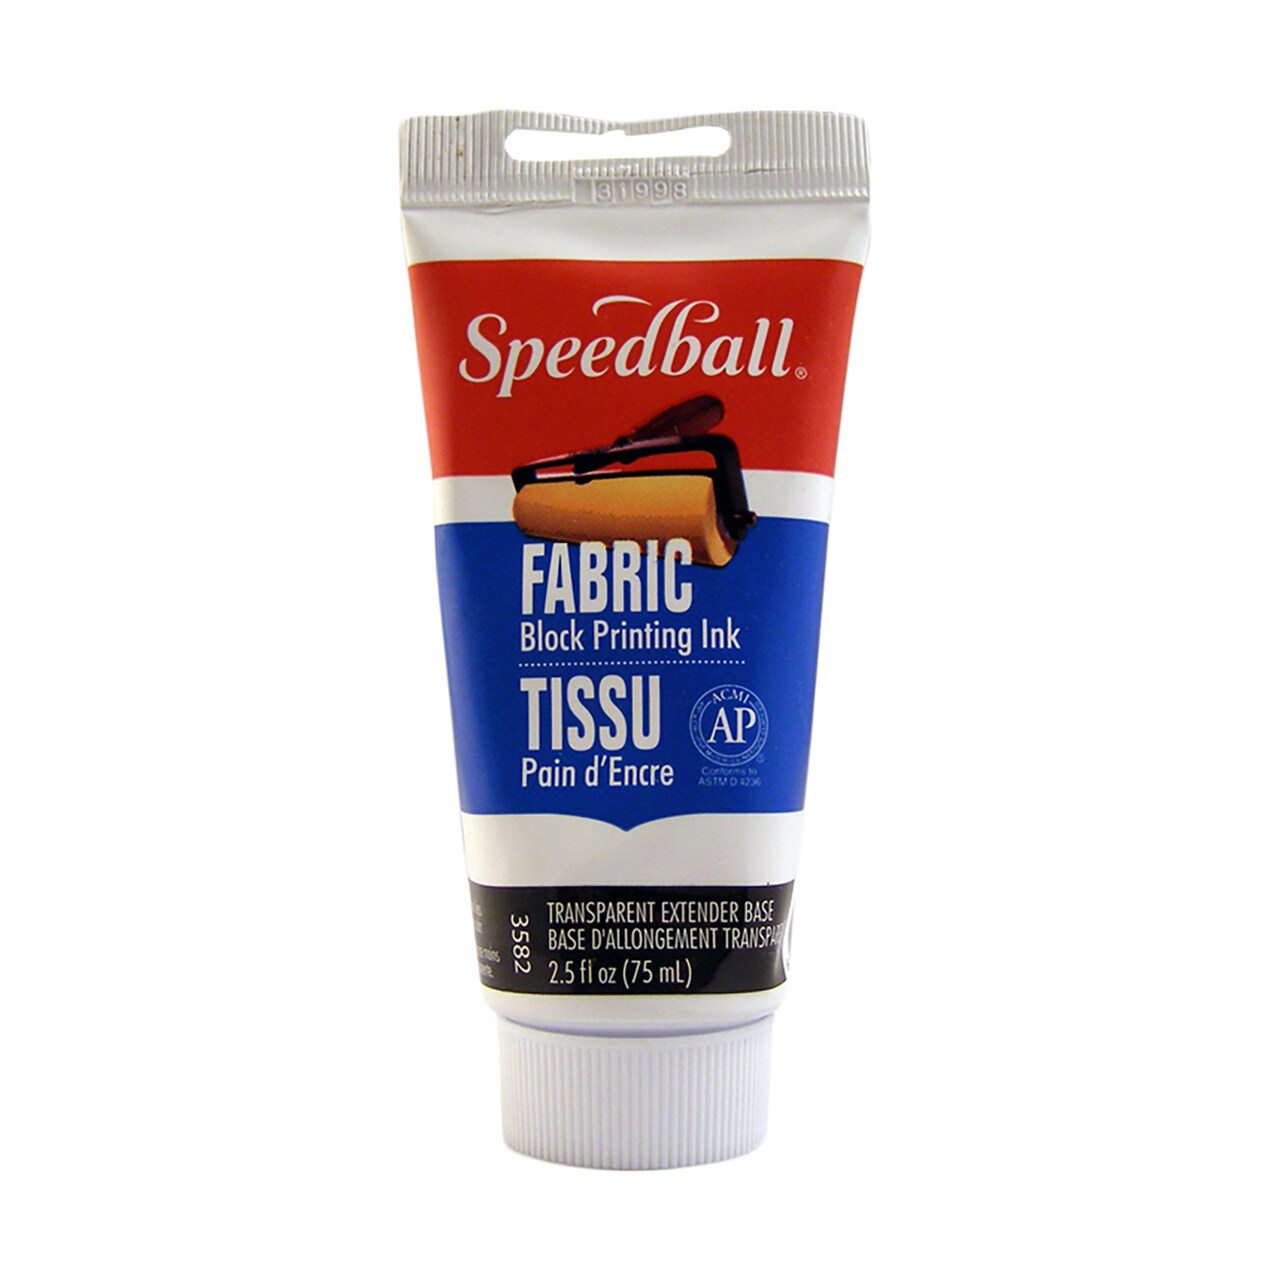 Speedball Printing Ink For Fabrics, 2.5 Oz., Transparent Extender